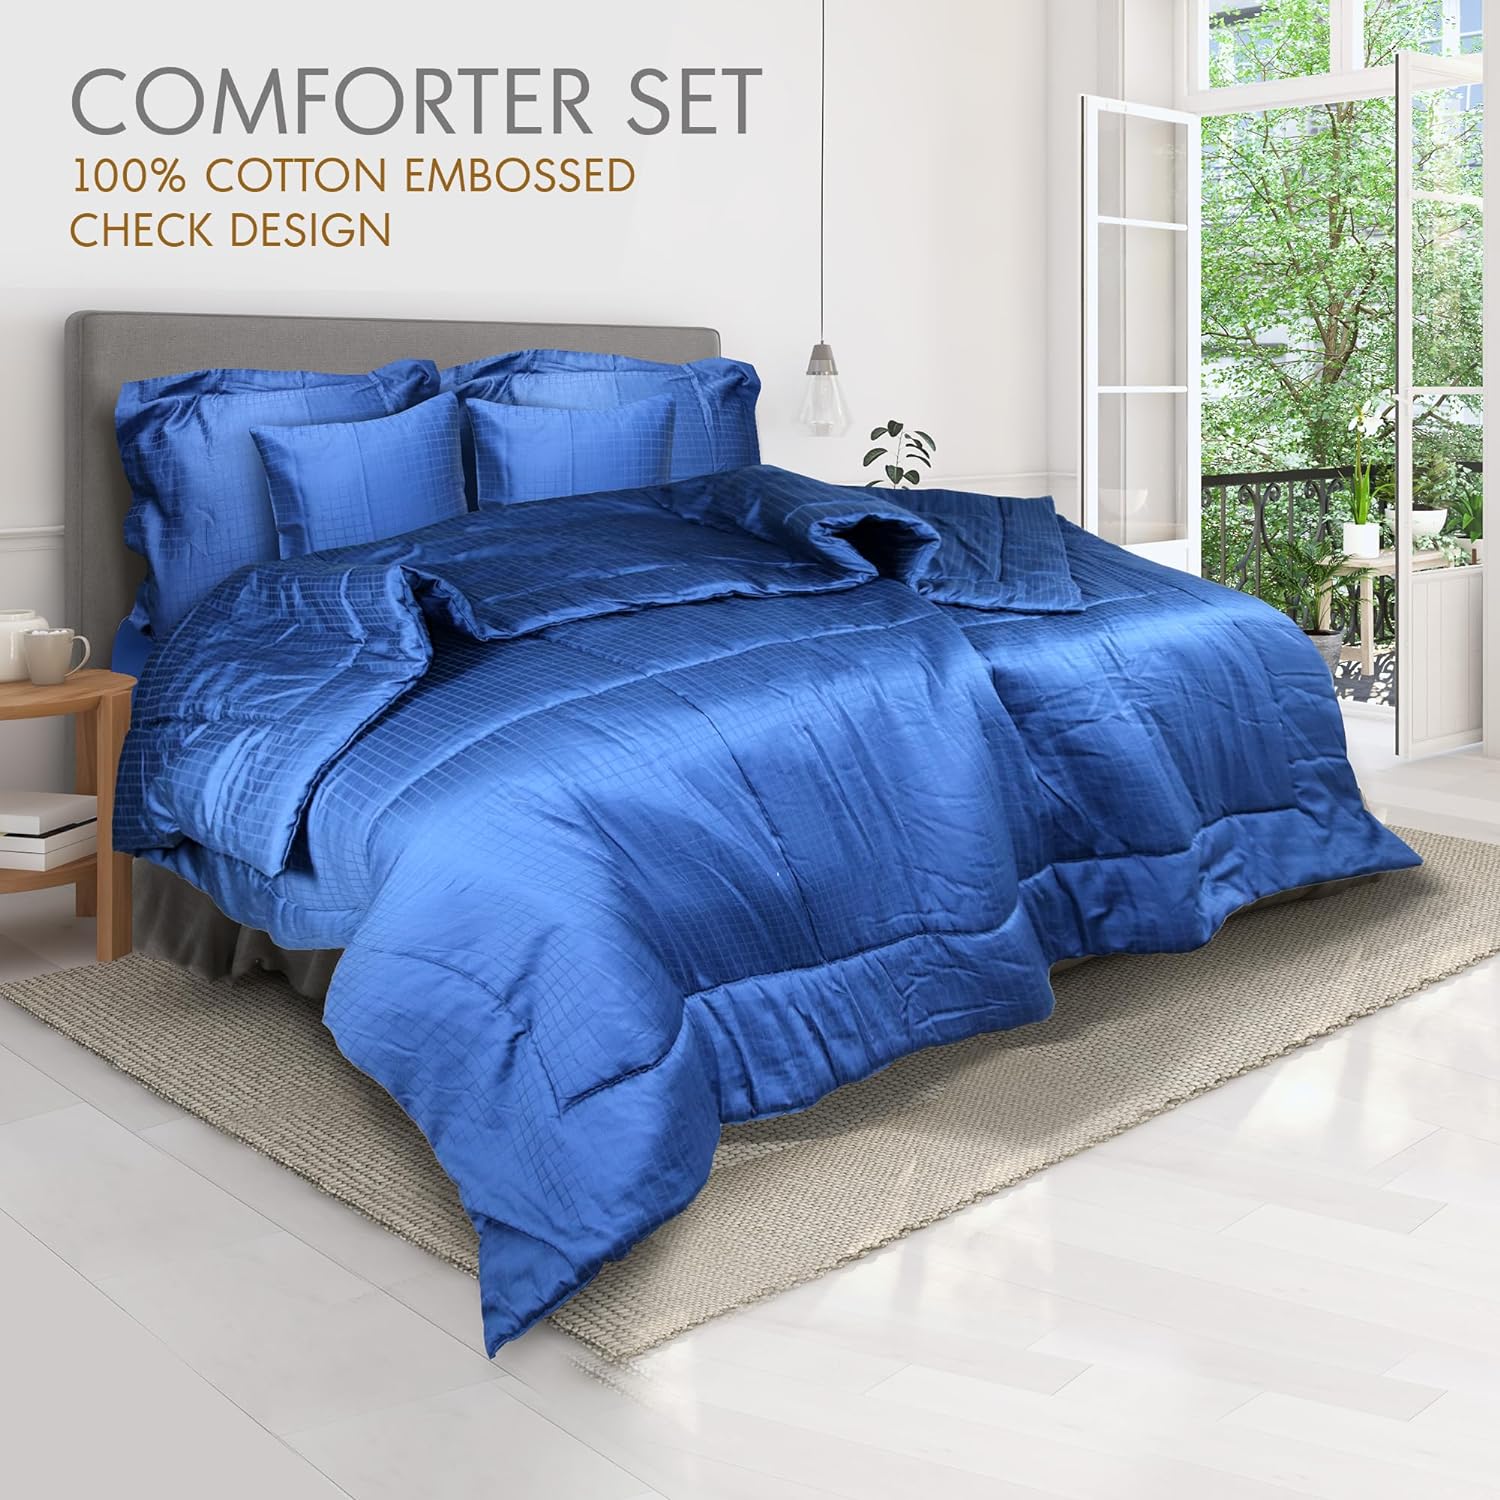 Hotel Linen Klub Deluxe Single Comforter 3 PC Set - 100% Cotton 250TC Dobby Jacquard Box Sateen Textured Design, Size: 160 x 220cm, Navy Blue